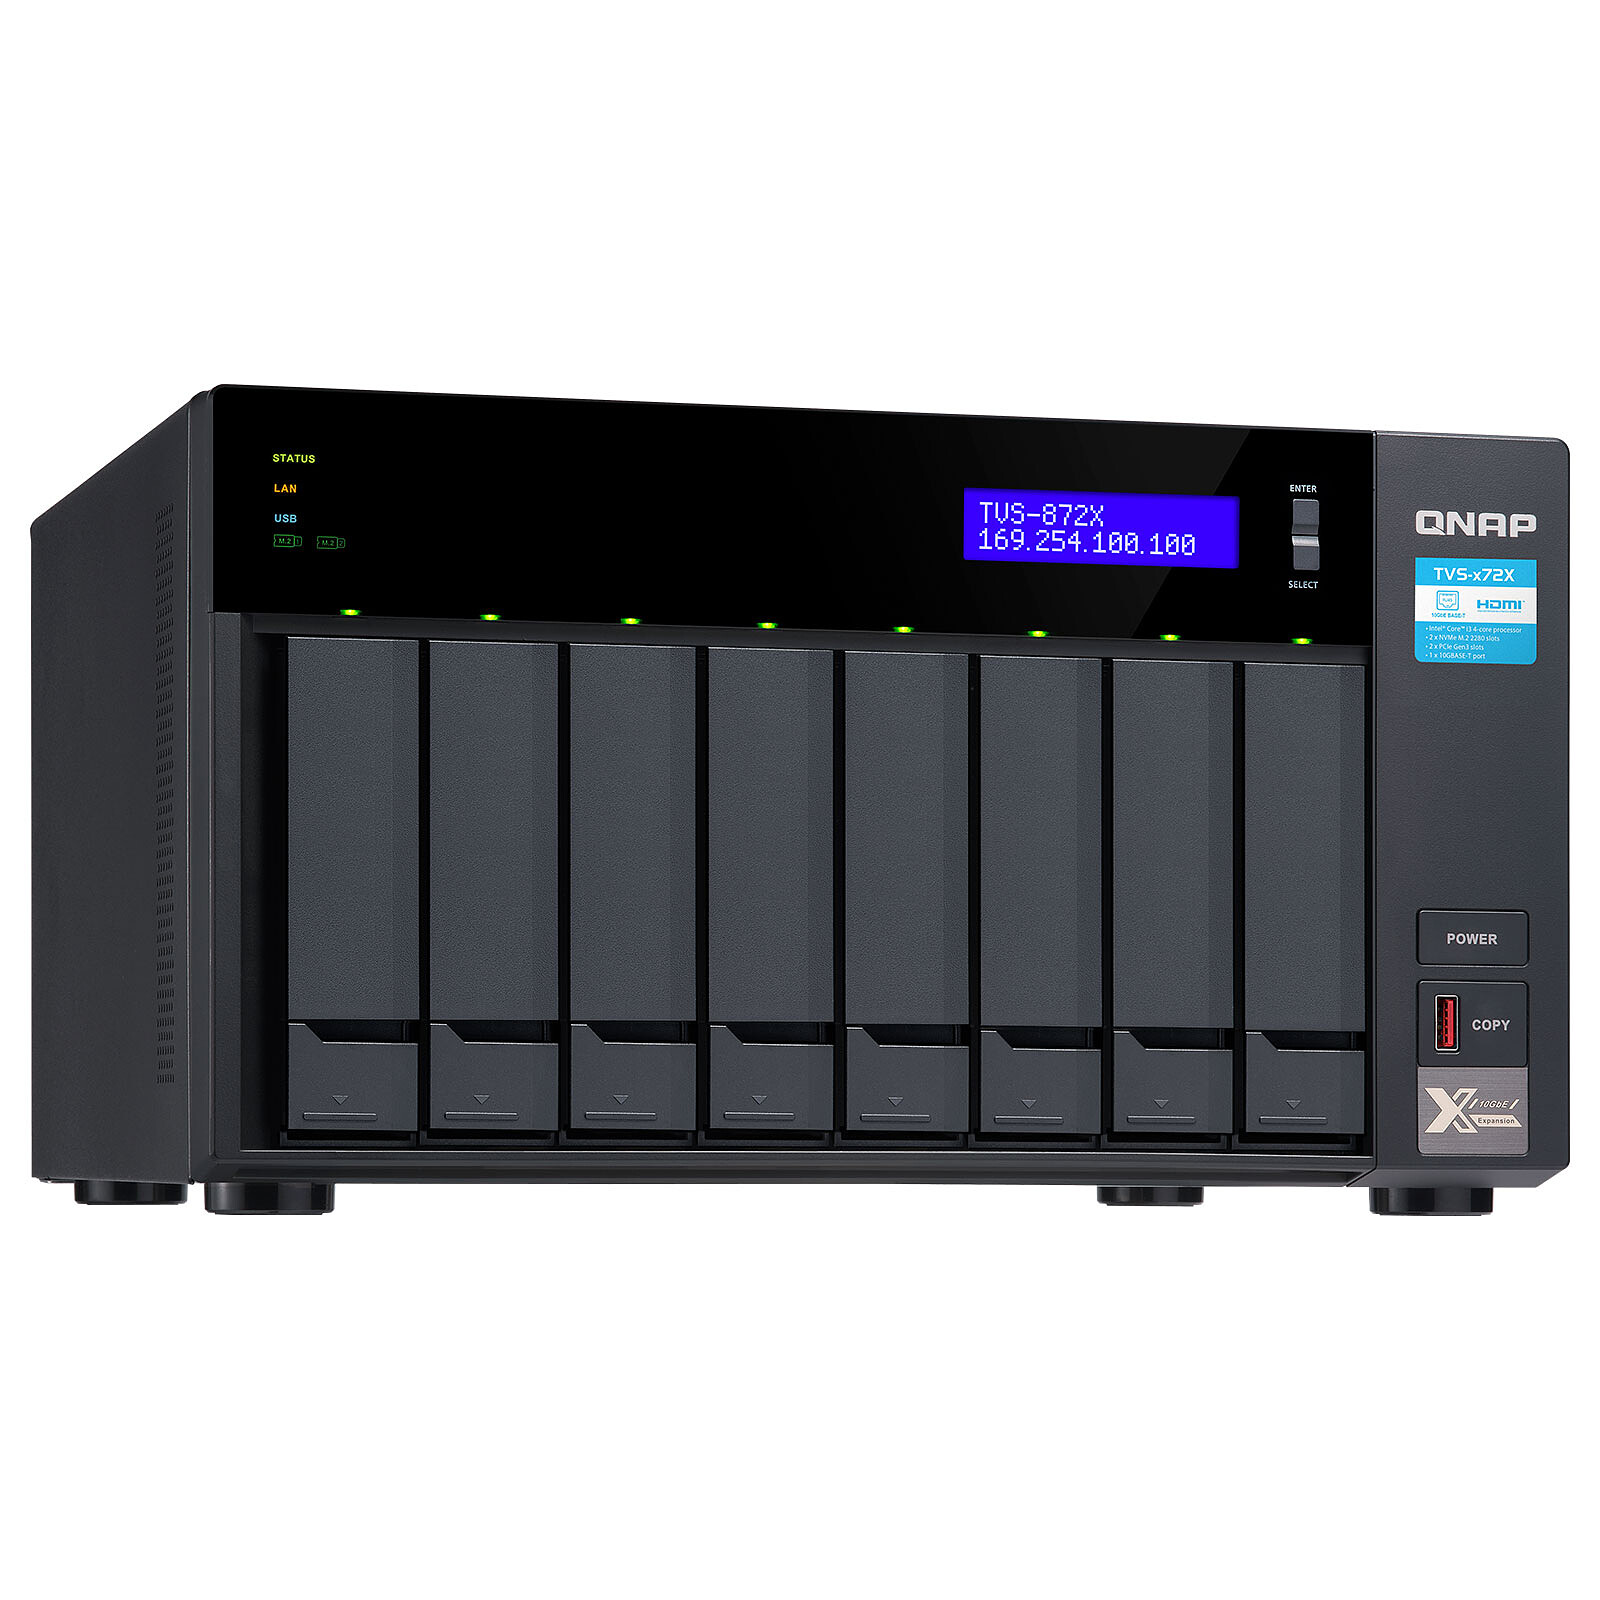 QNAP TVS-872X-I3-8G - NAS server - LDLC 3-year warranty